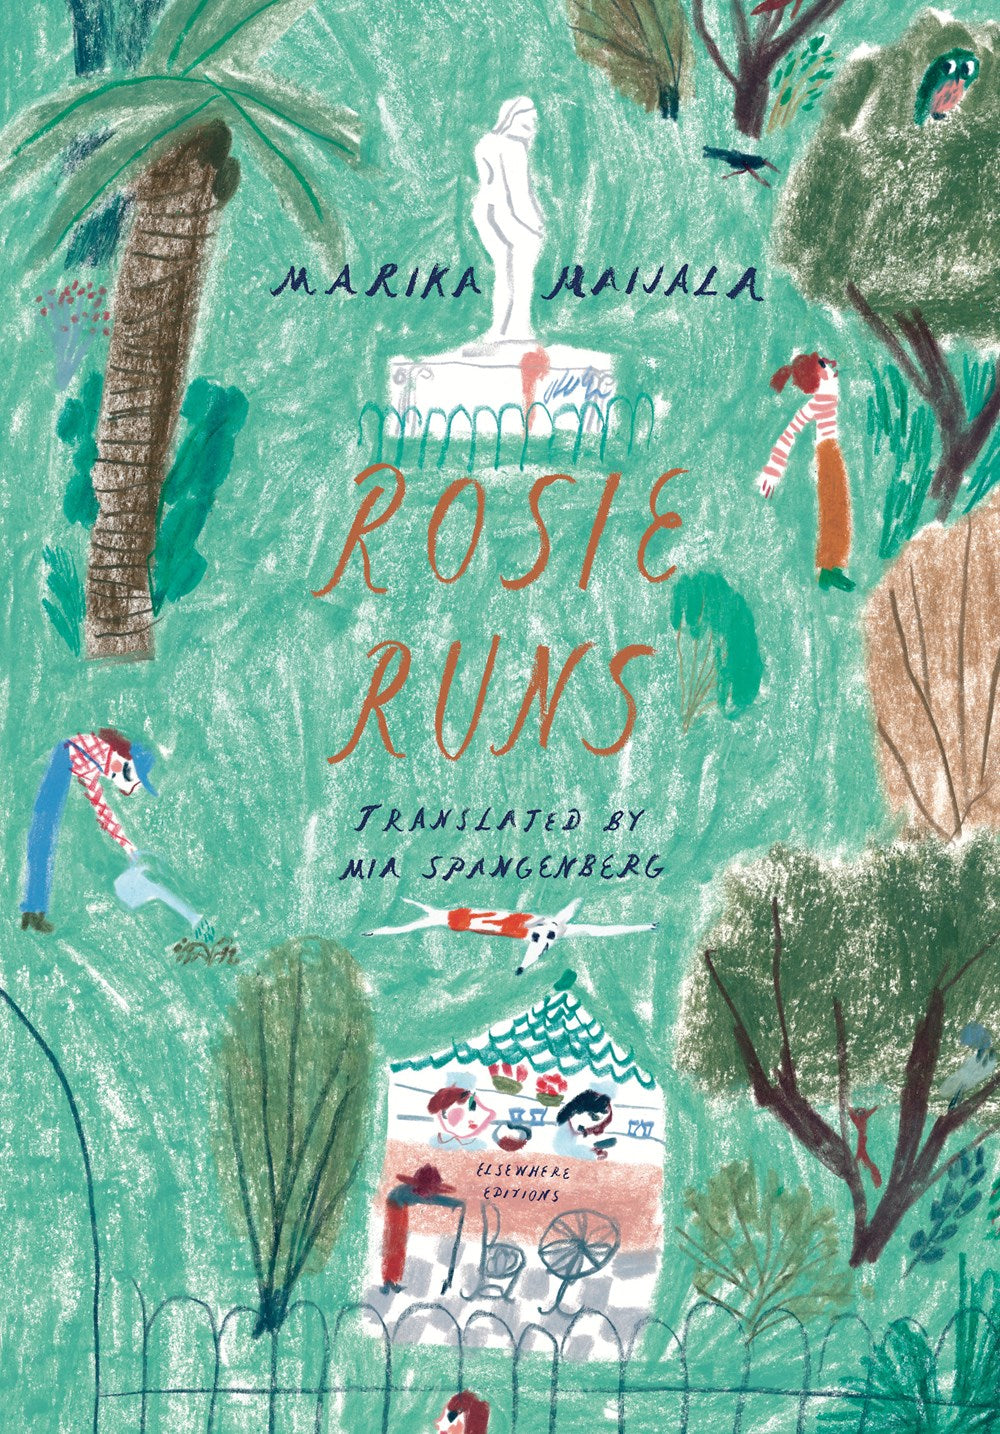 Rosie Runs by Marika Maijala (Translated by Mia Spangenberg)